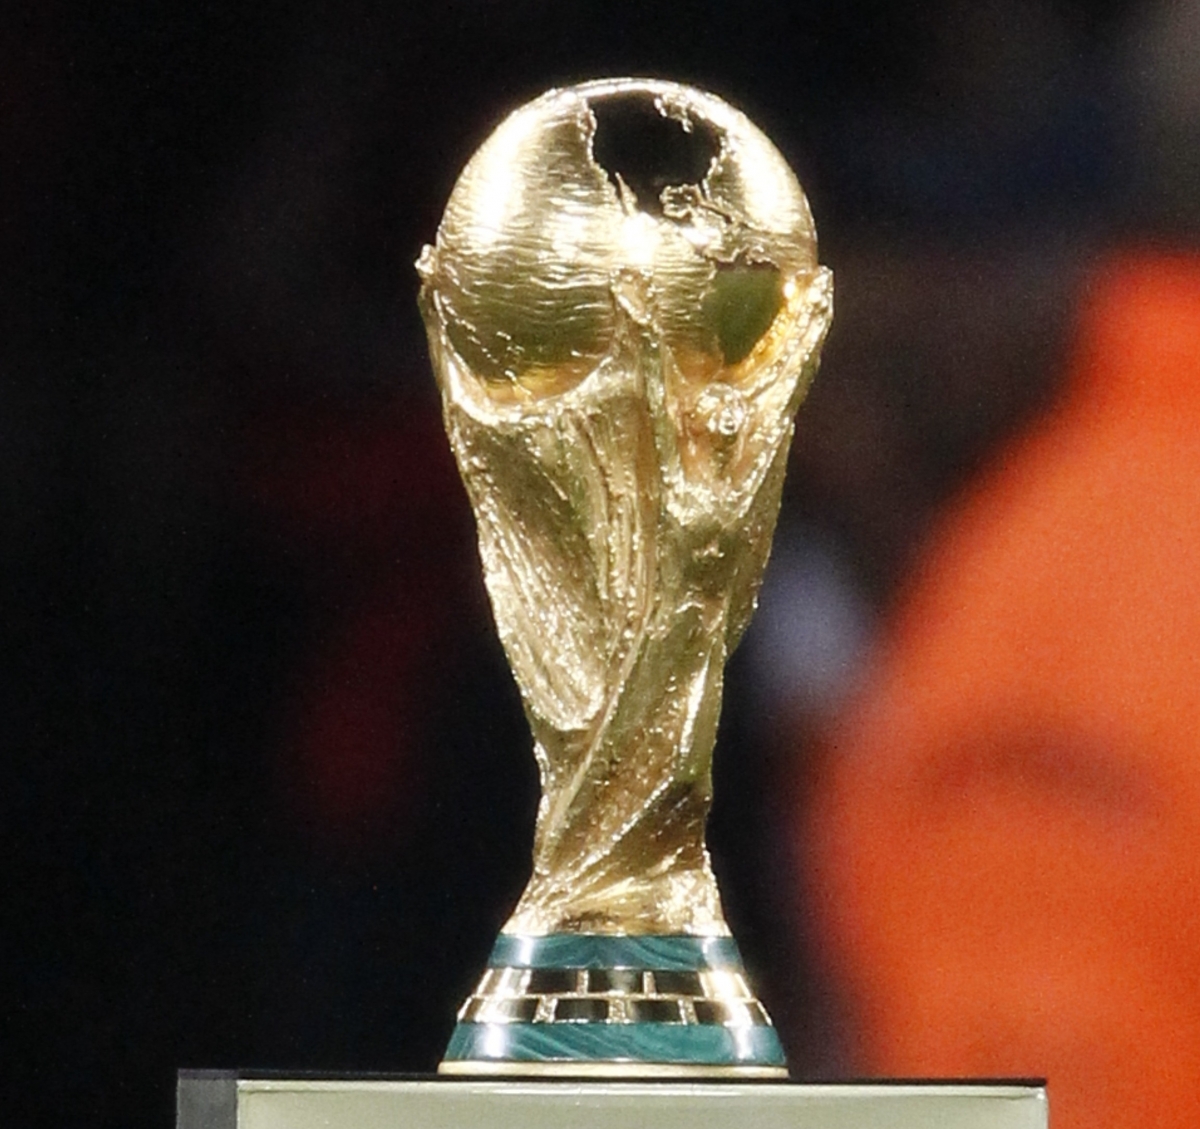 World Cup 2014 IBTimes UK Predictions